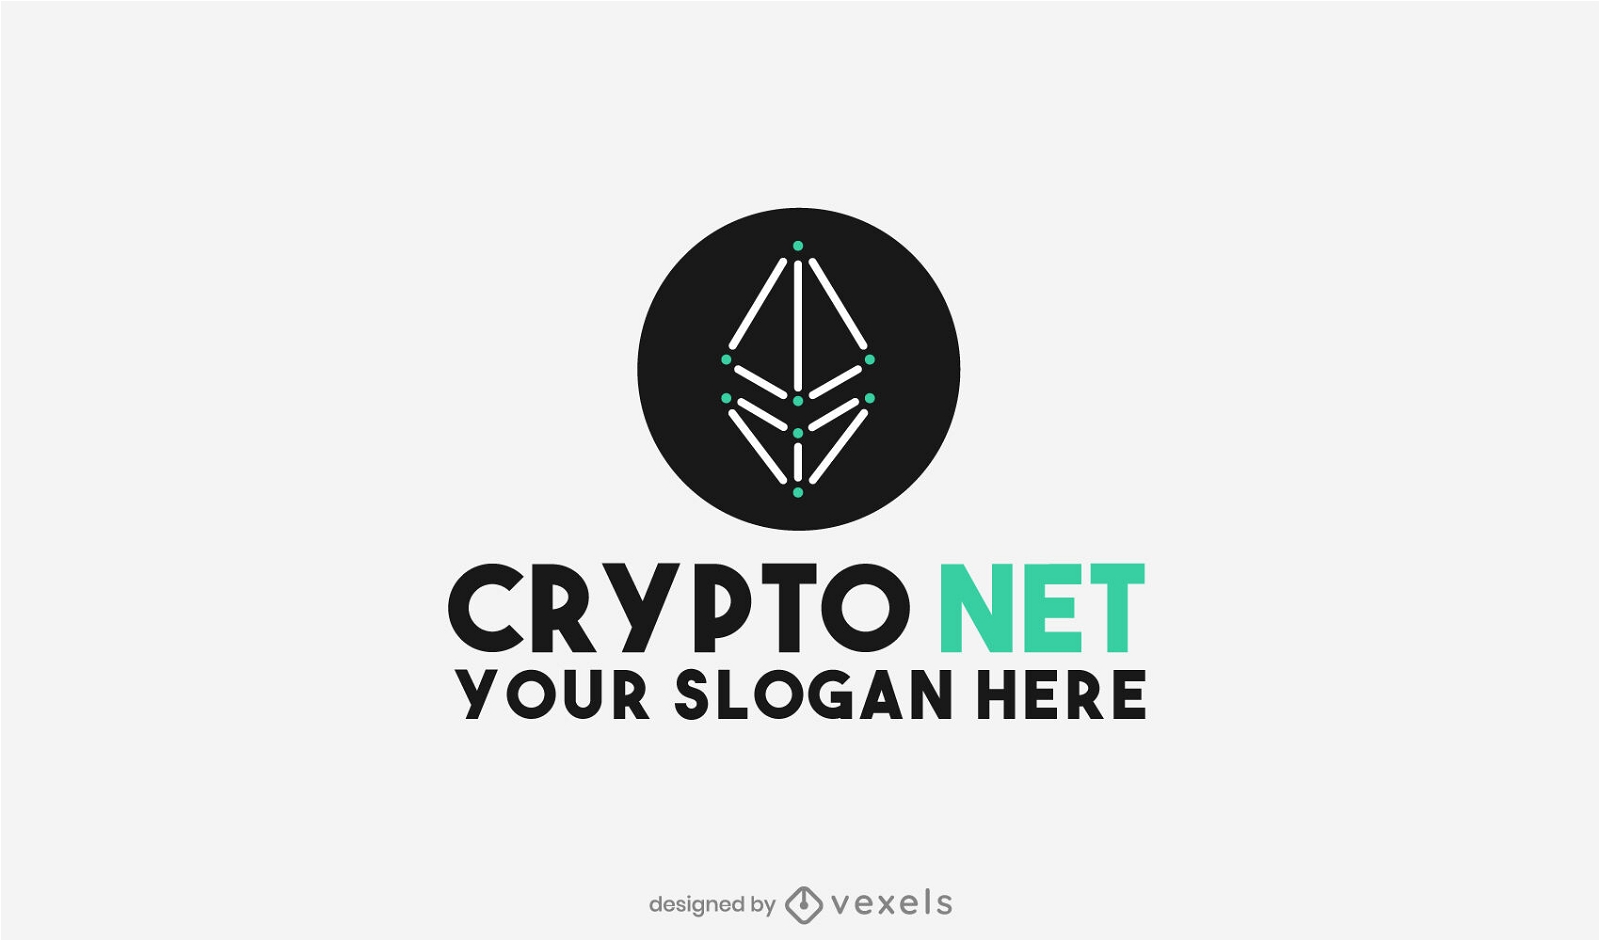 Design des Crypto Currency-Logos